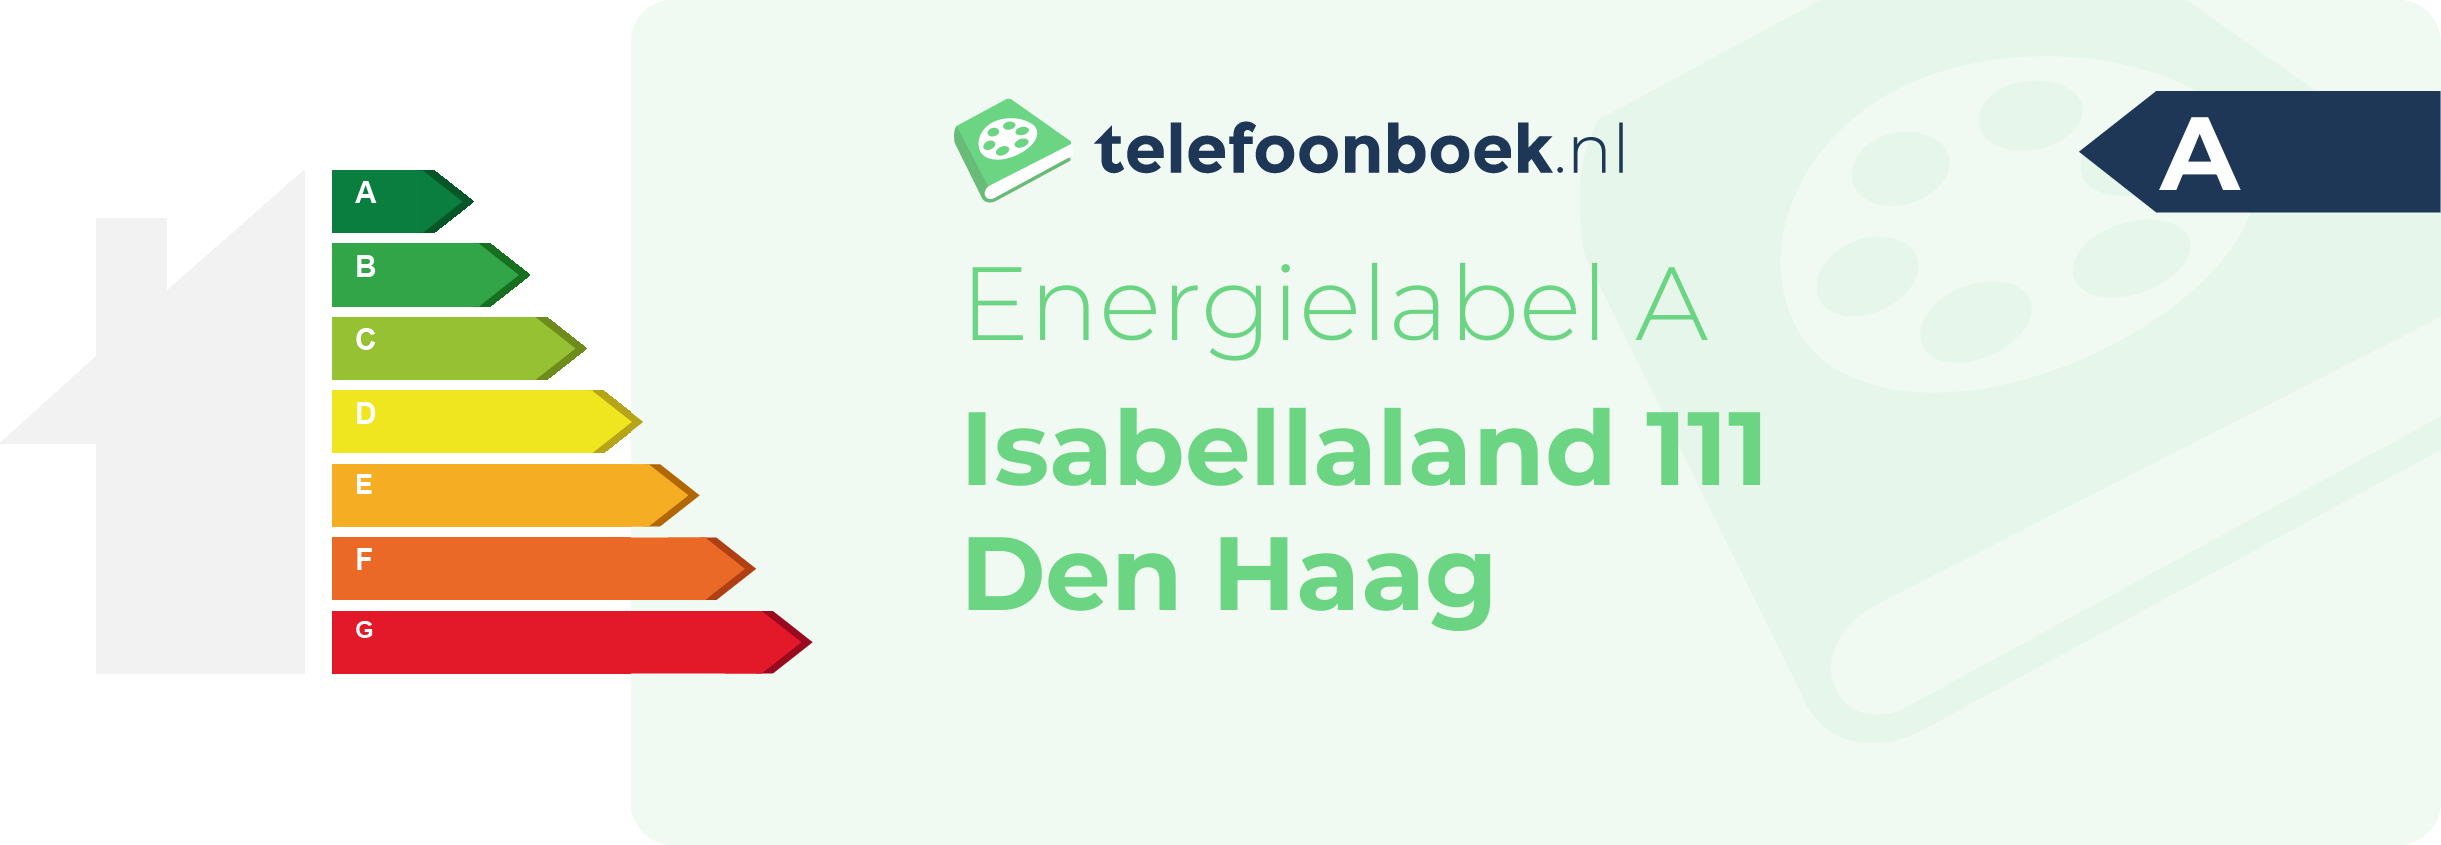 Energielabel Isabellaland 111 Den Haag